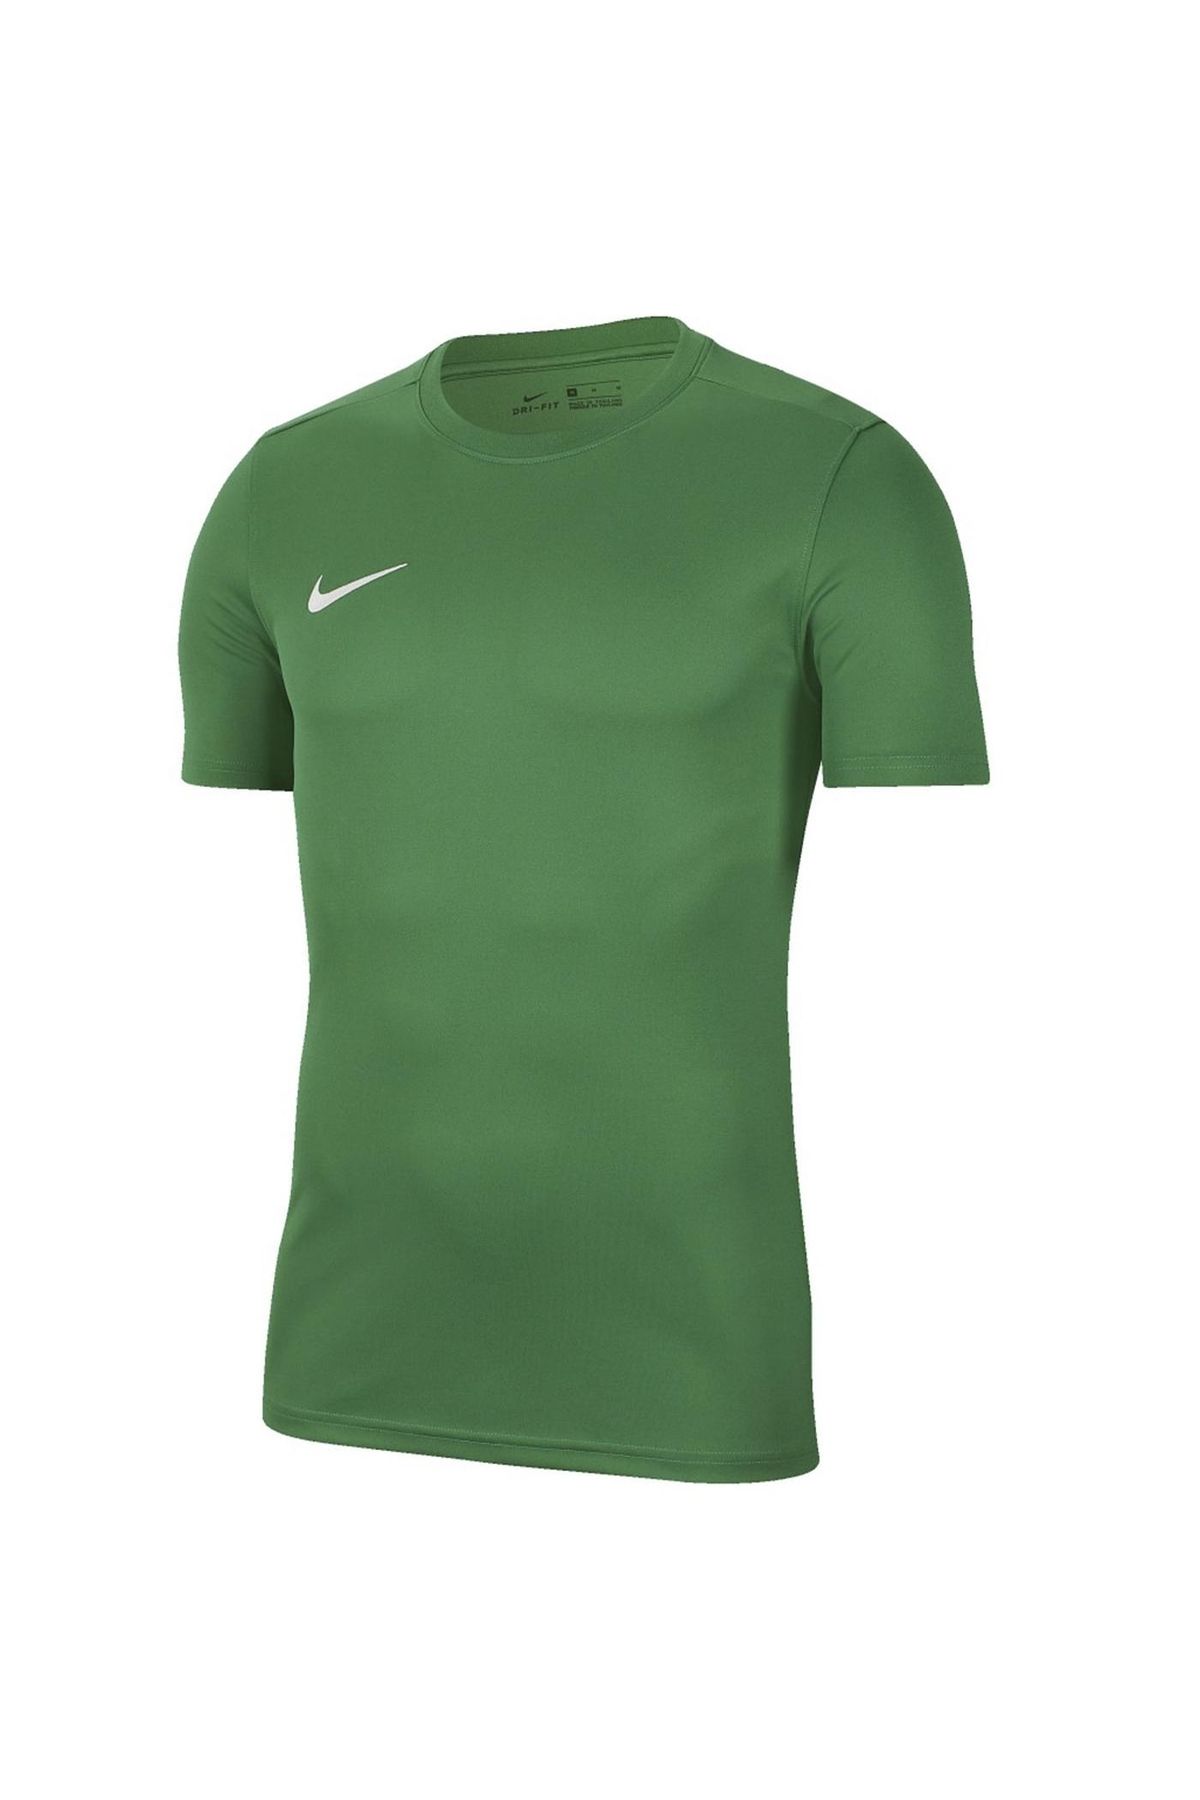 Nike Dry Park Vıı Jsy Erkek Tişört & Forma - Bv6708-302